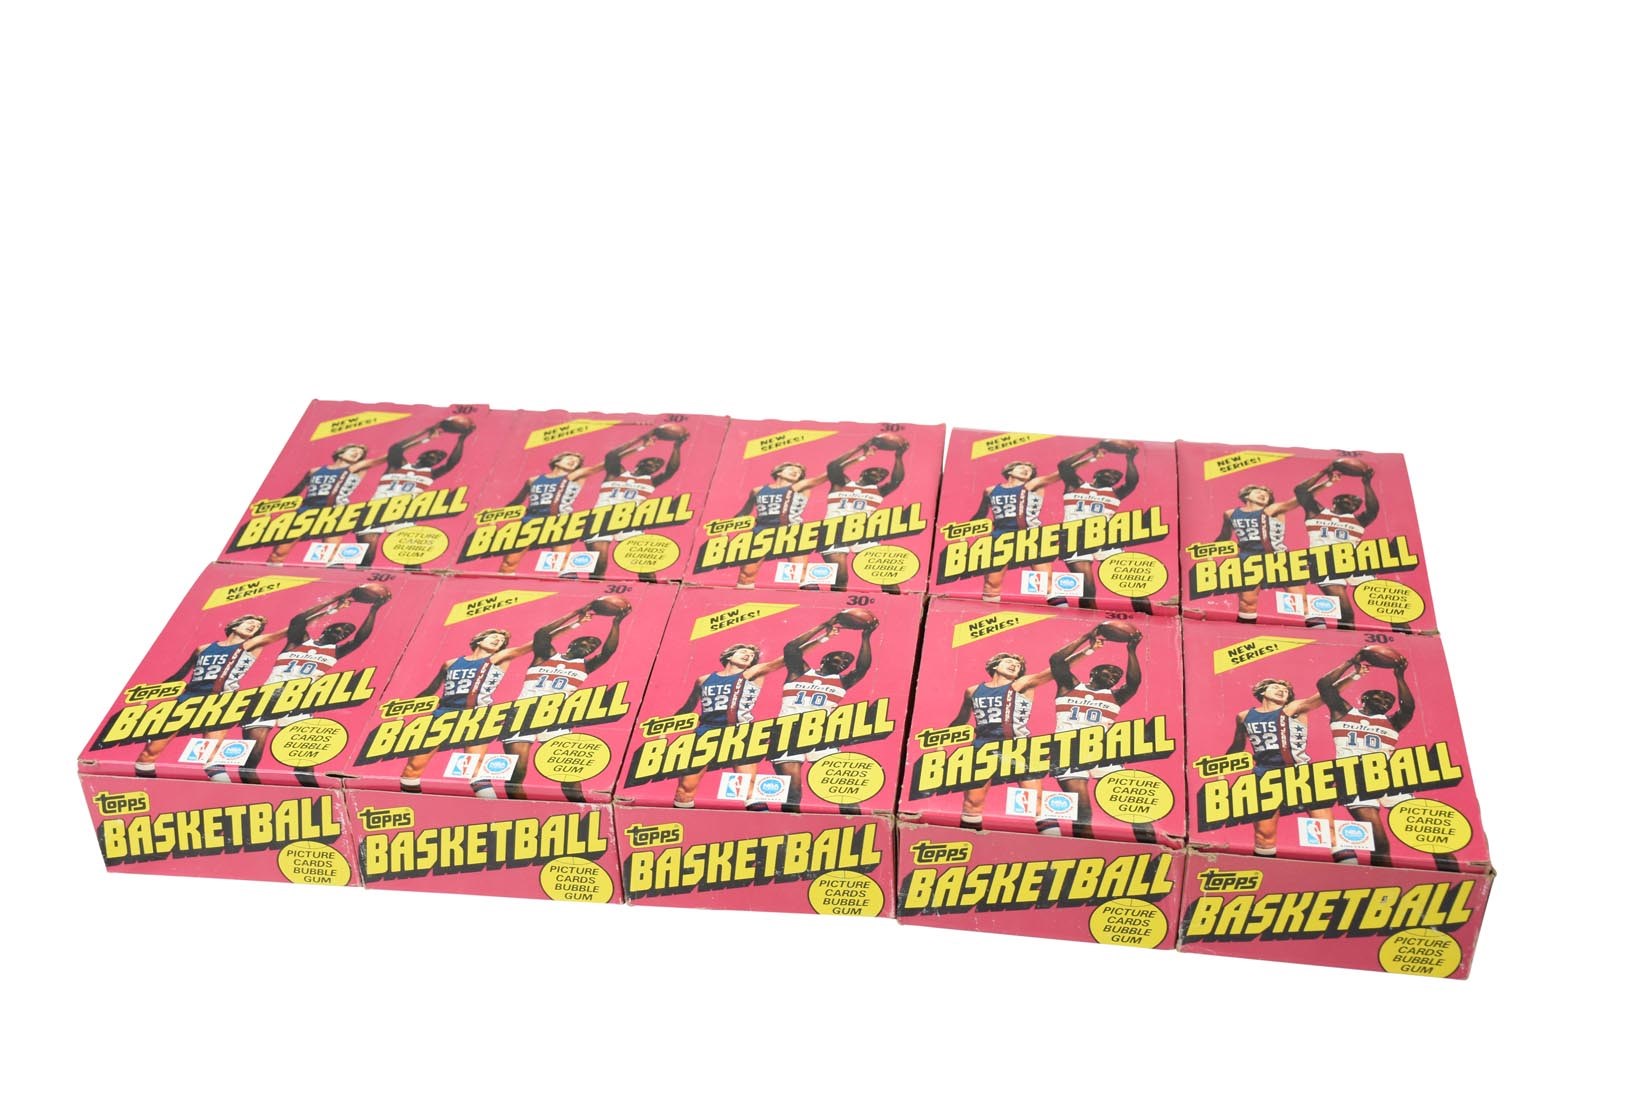 1981 Topps Basketball Wax Box Lot of 10 Boxes with Original Wax Carton!